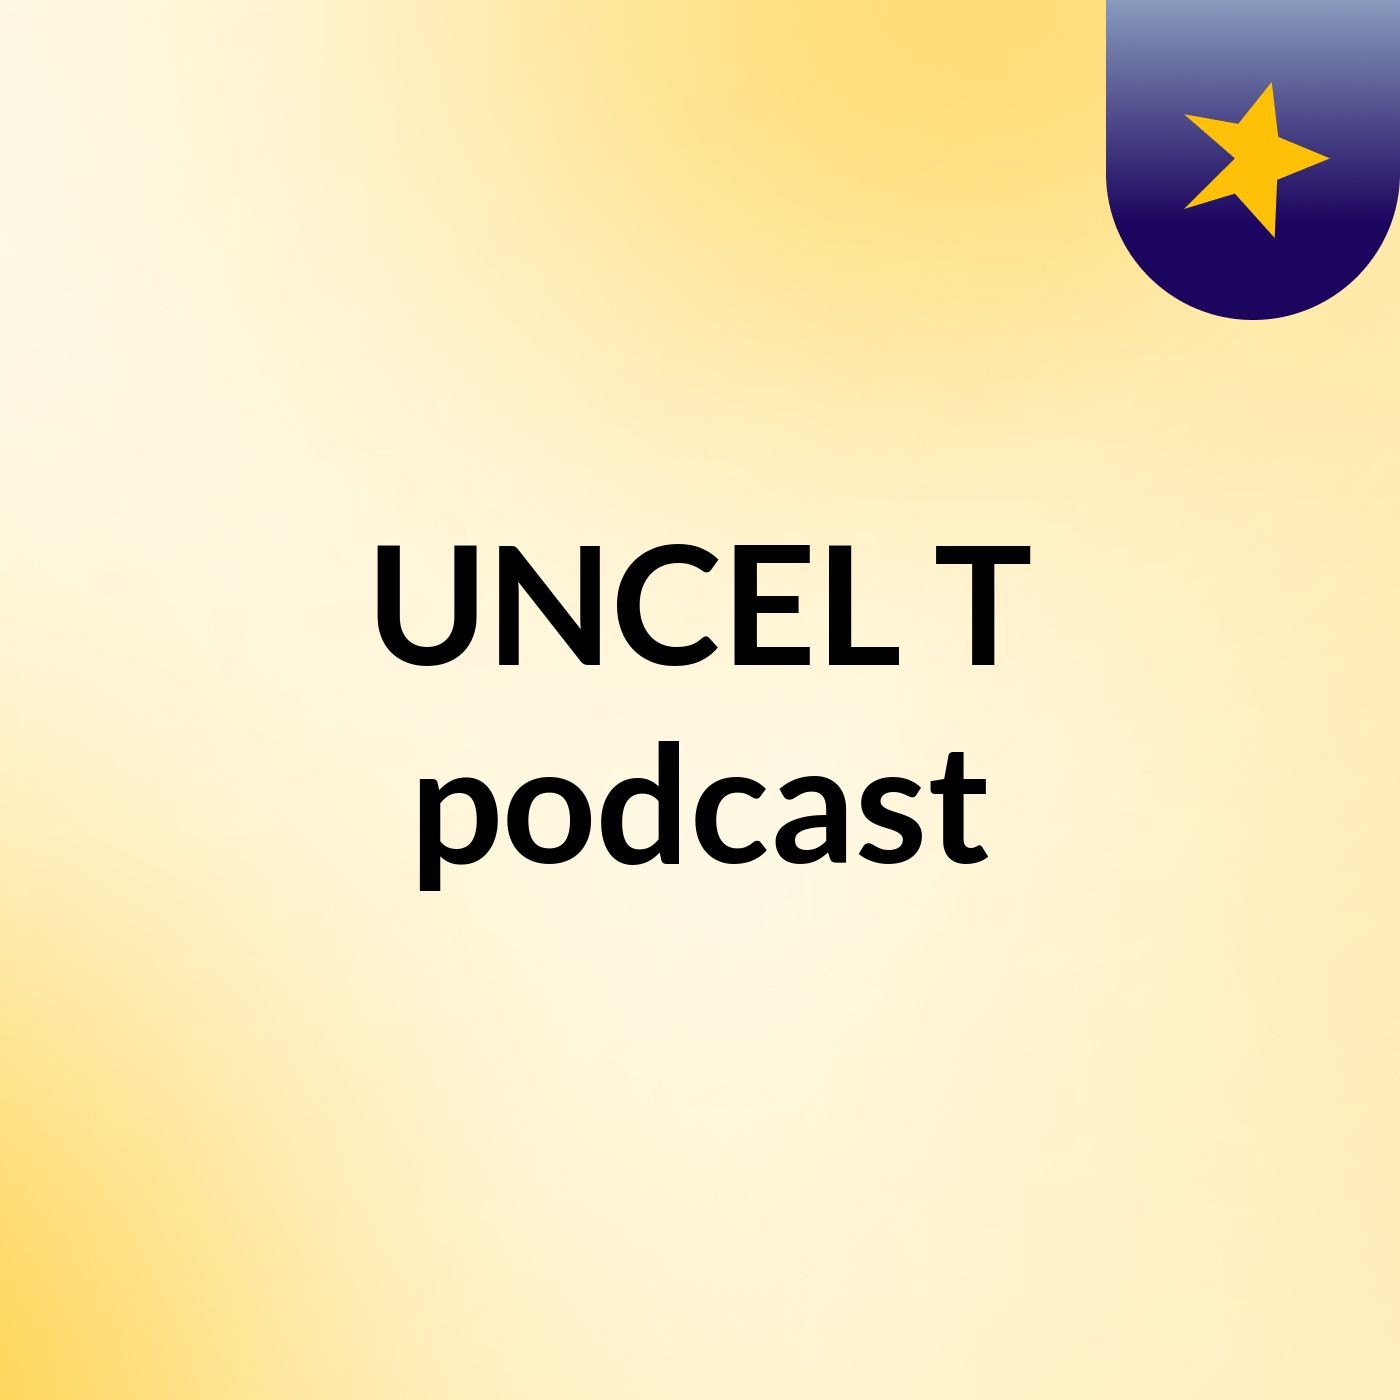 UNCEL T podcast